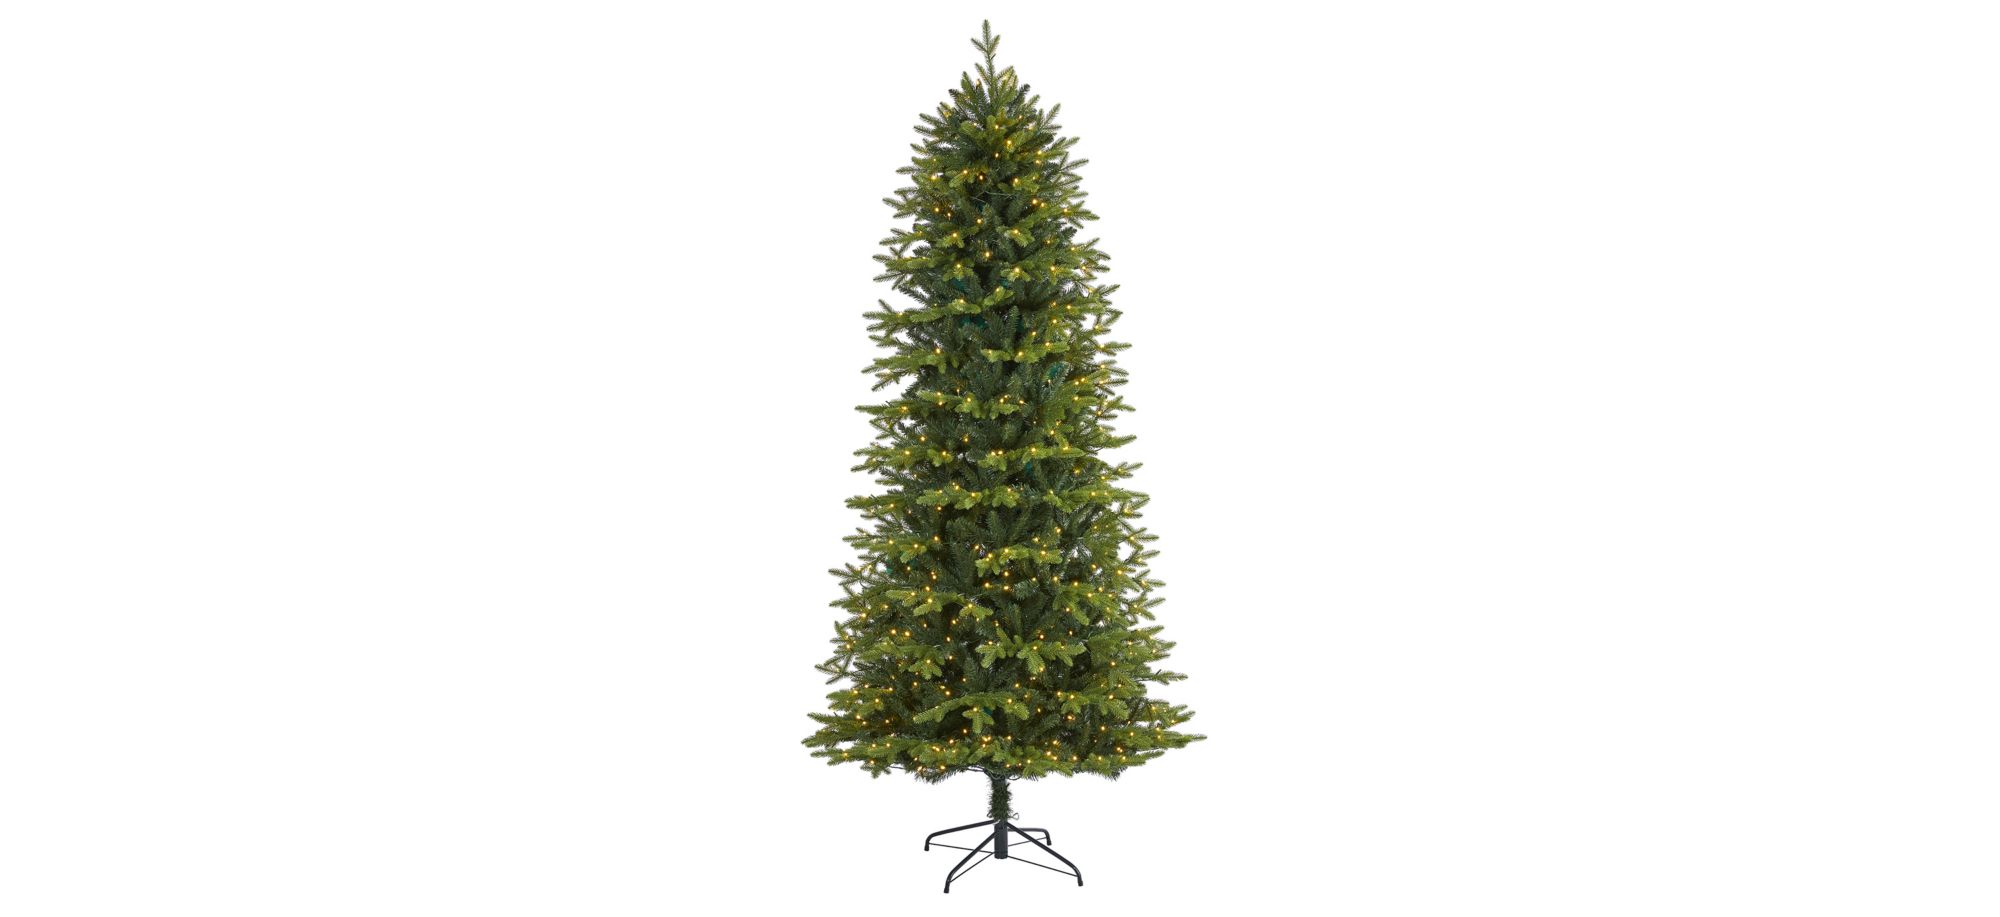 8ft. Pre-Lit Belgium Fir "Natural Look" Artificial Christmas Tree in Green by Bellanest